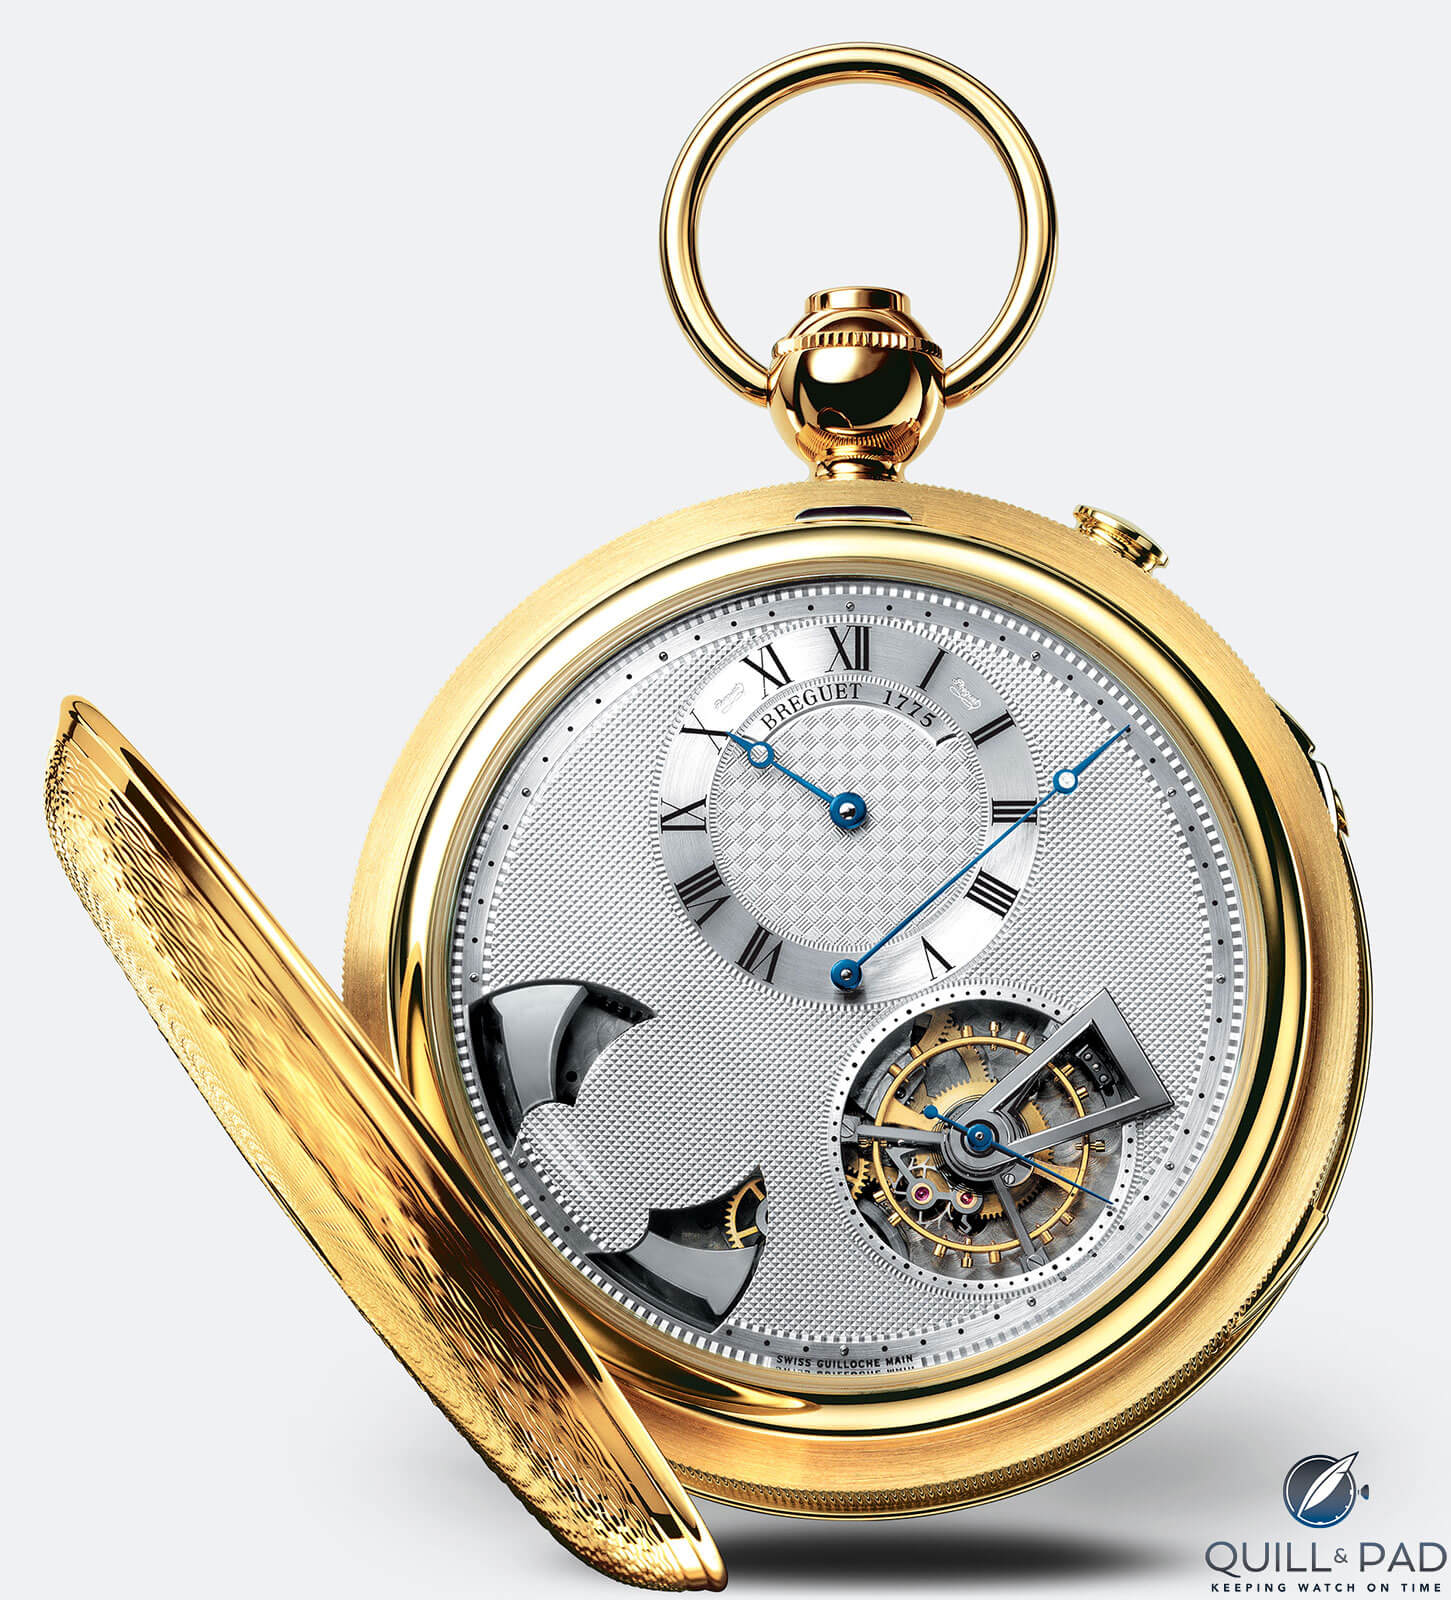 Breguet Classique Grande Complication Reference 1907 pocket watch